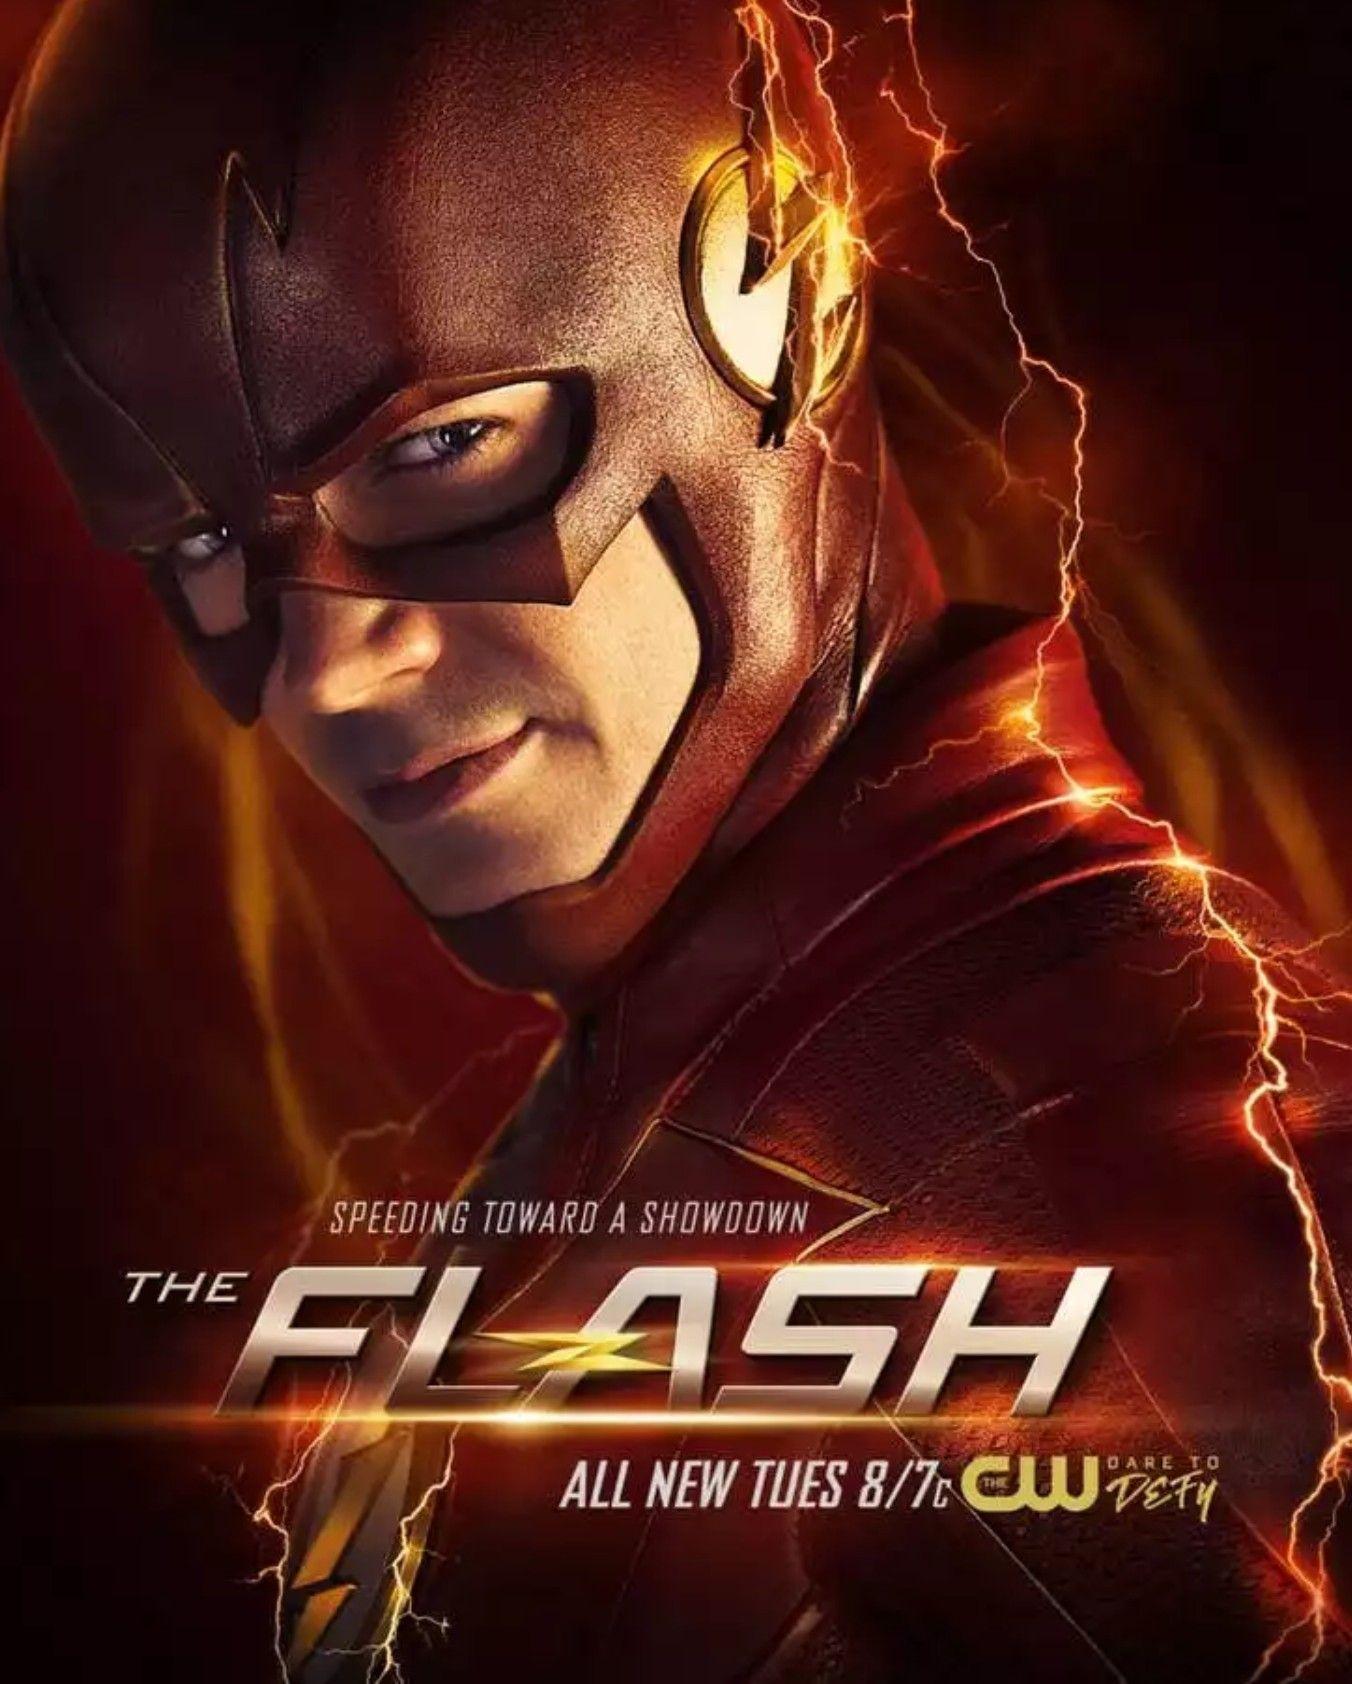 The Flash season 4 new poster. Flash. The flash season